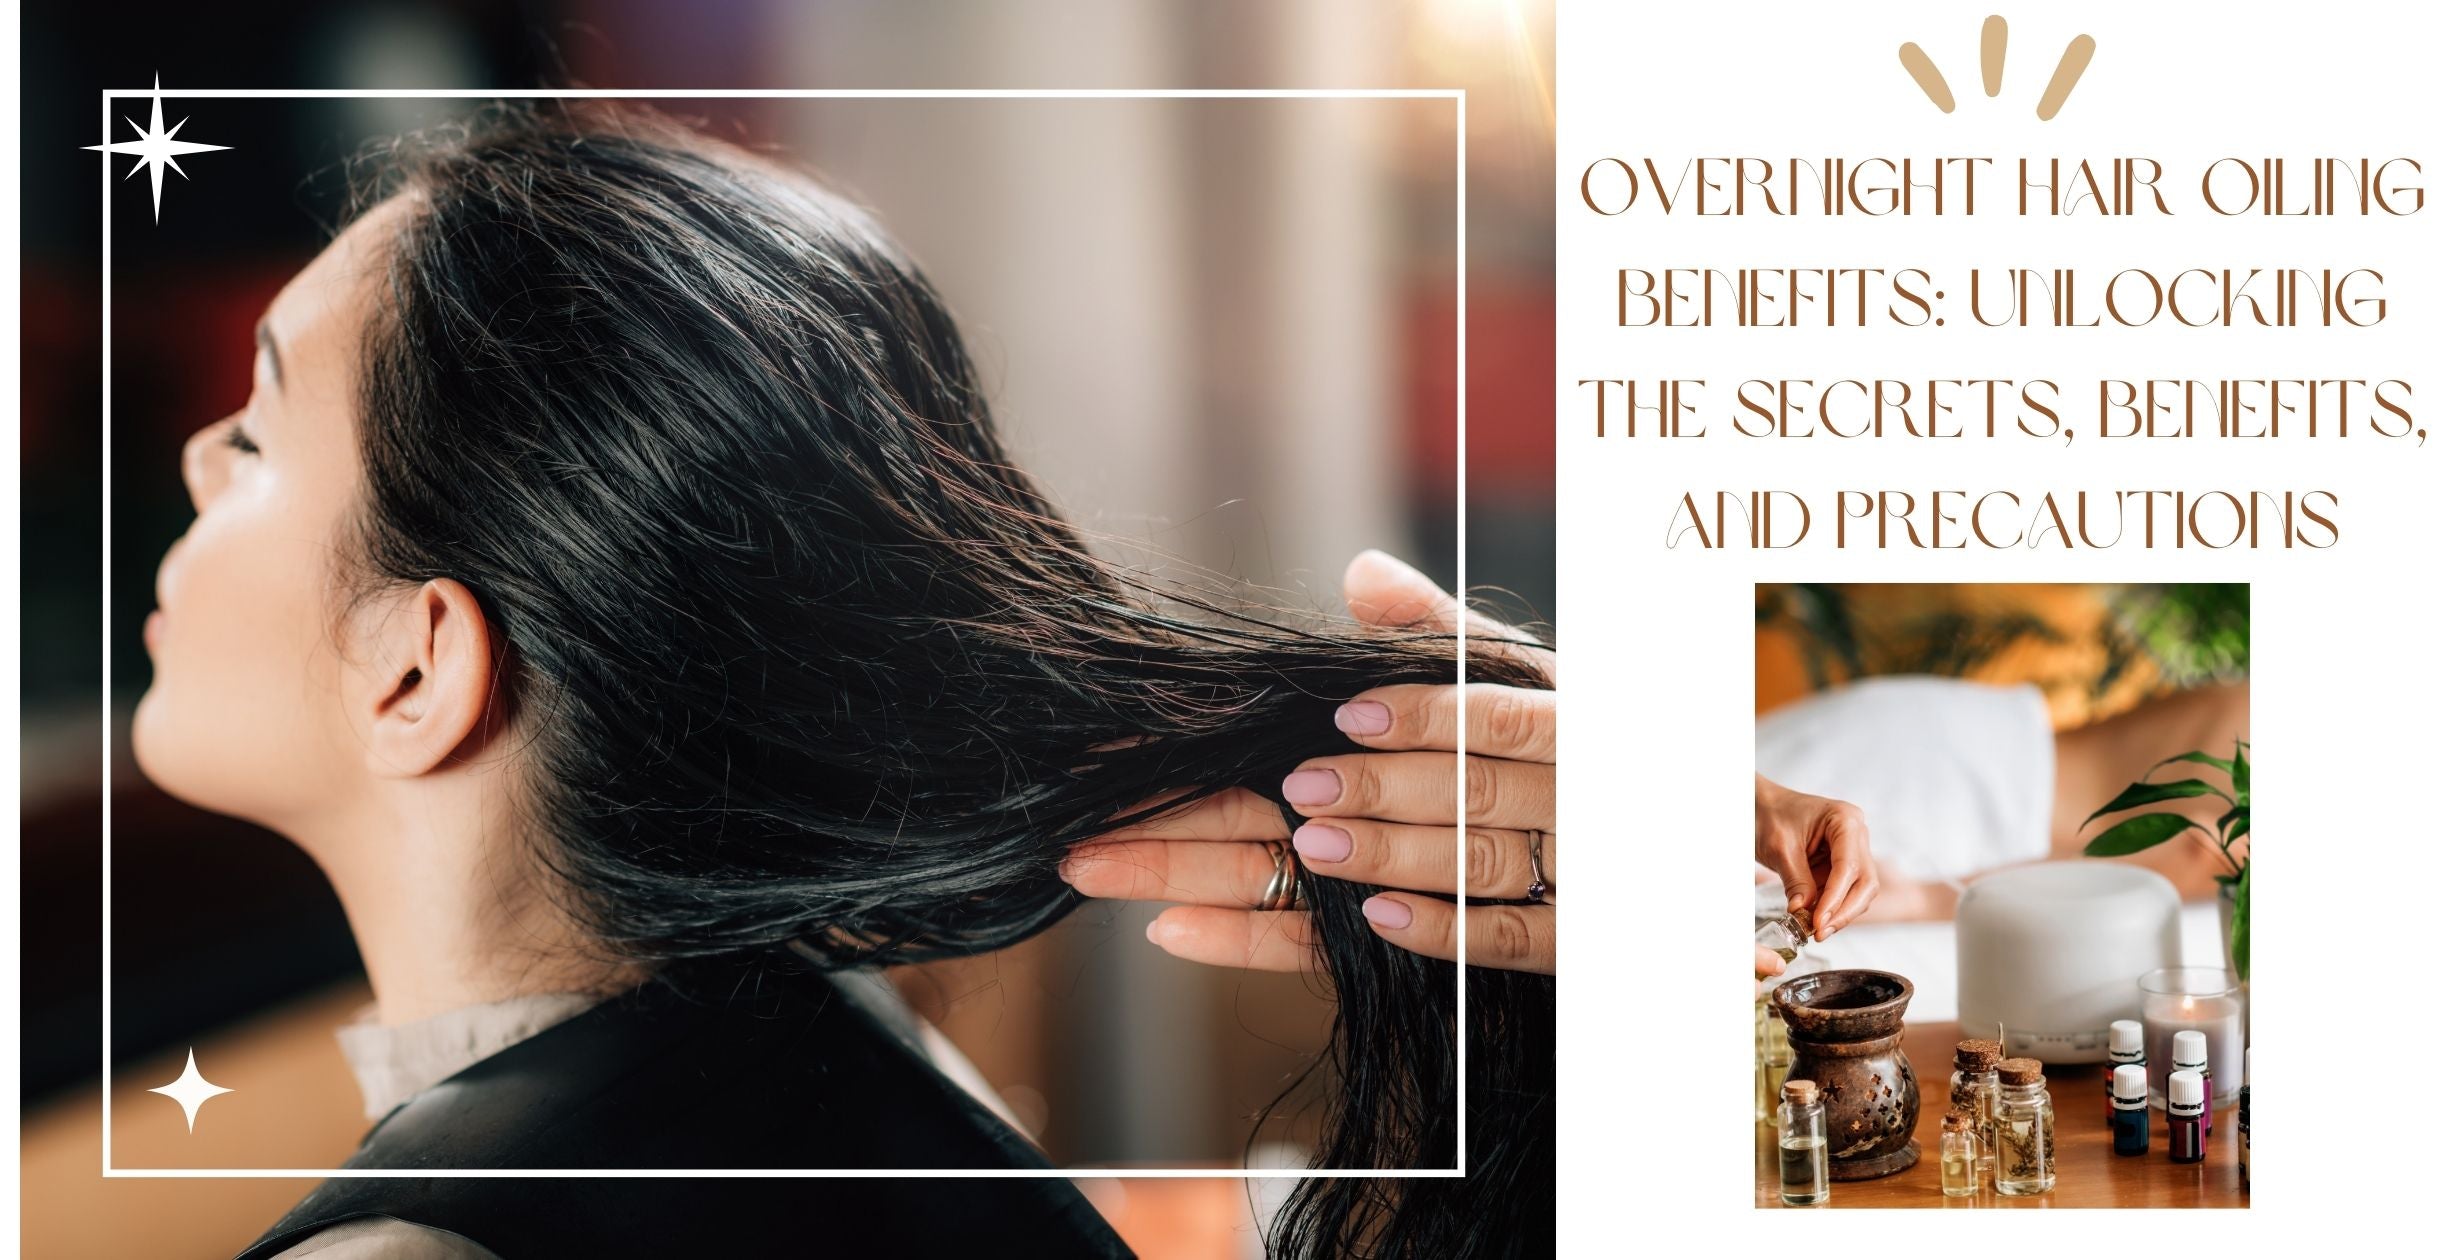 Overnight Hair Oiling Benefits: Unlocking the Secrets, Benefits, and Precautions